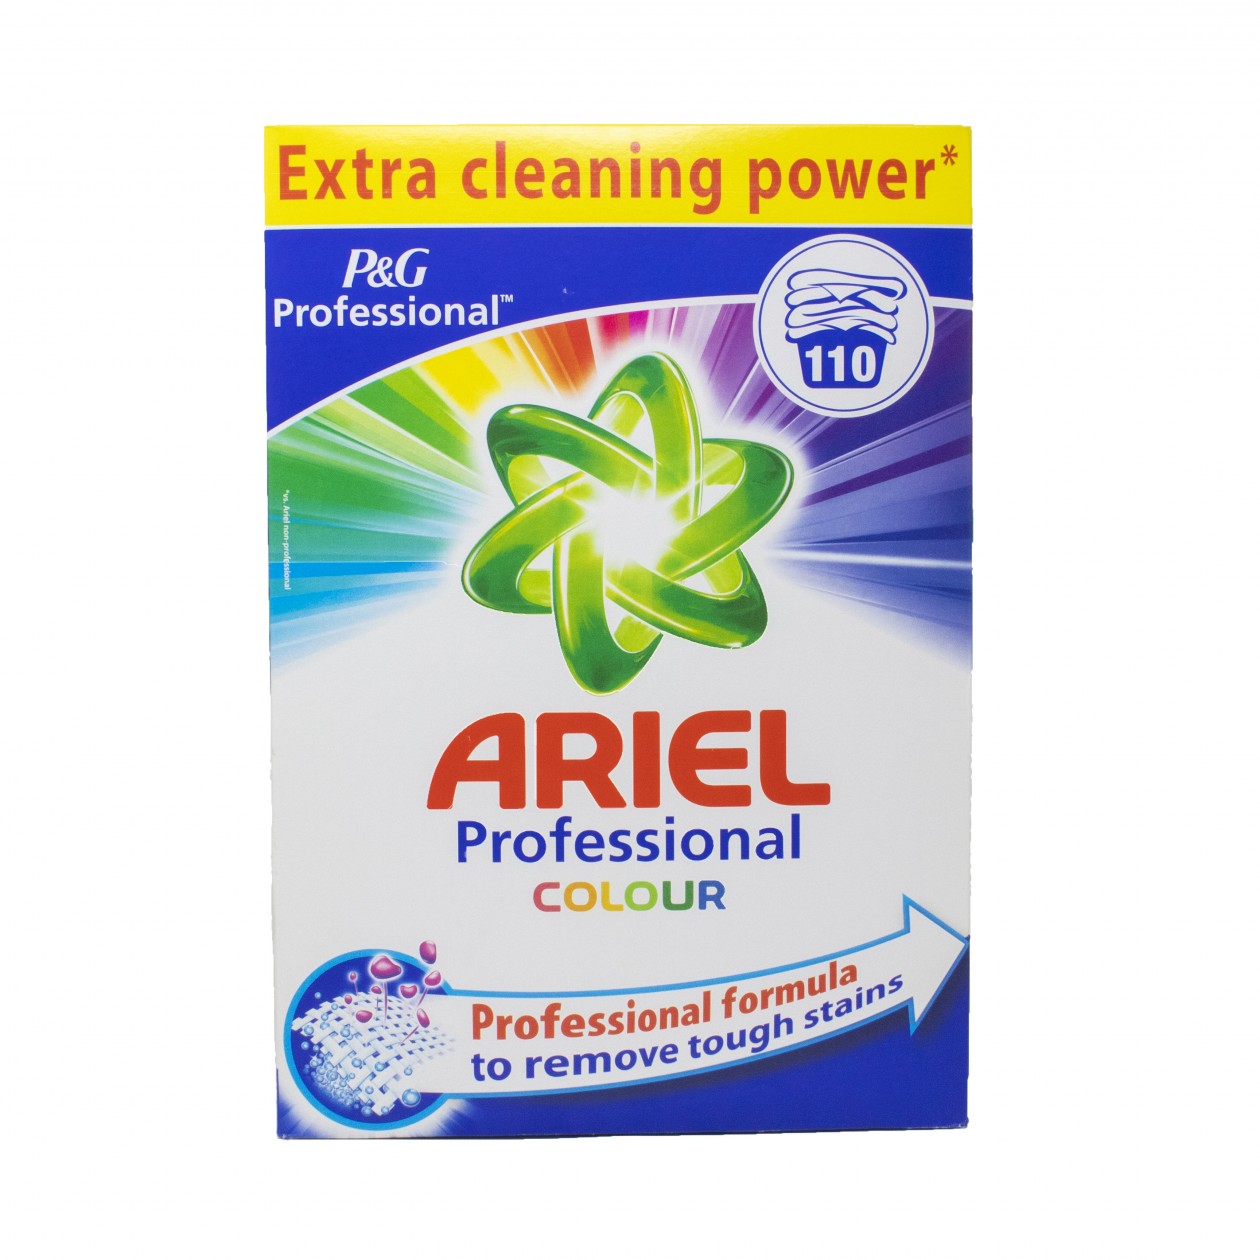 Ariel professional washing powder colour 6.5kg